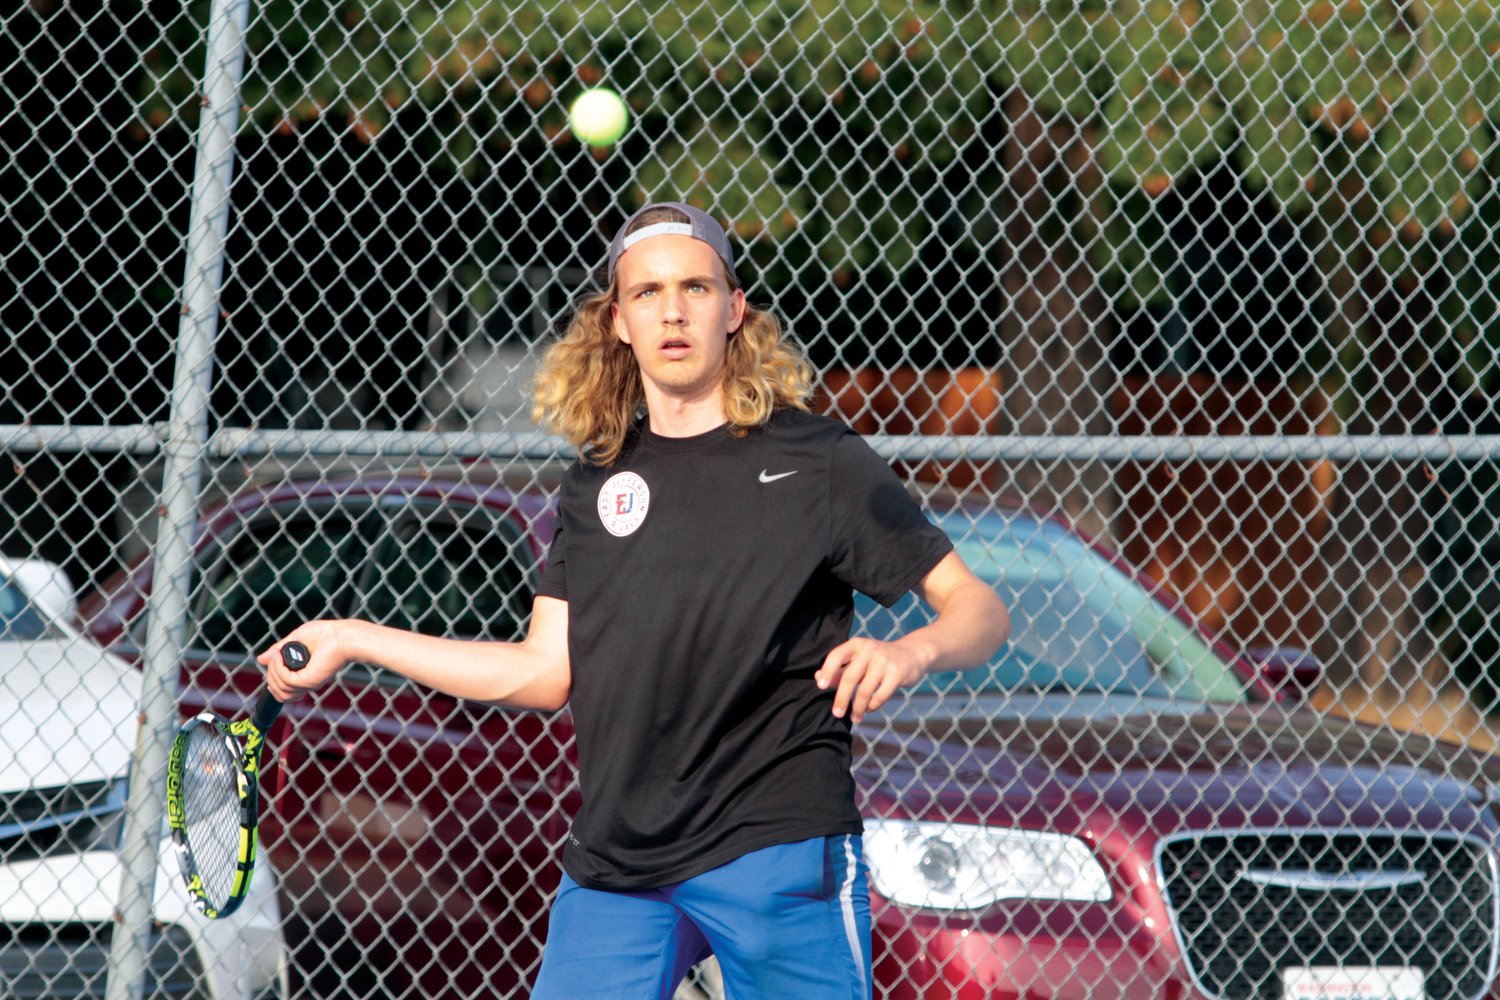 Reid Martin of the East Jefferson Rivals tennis team.